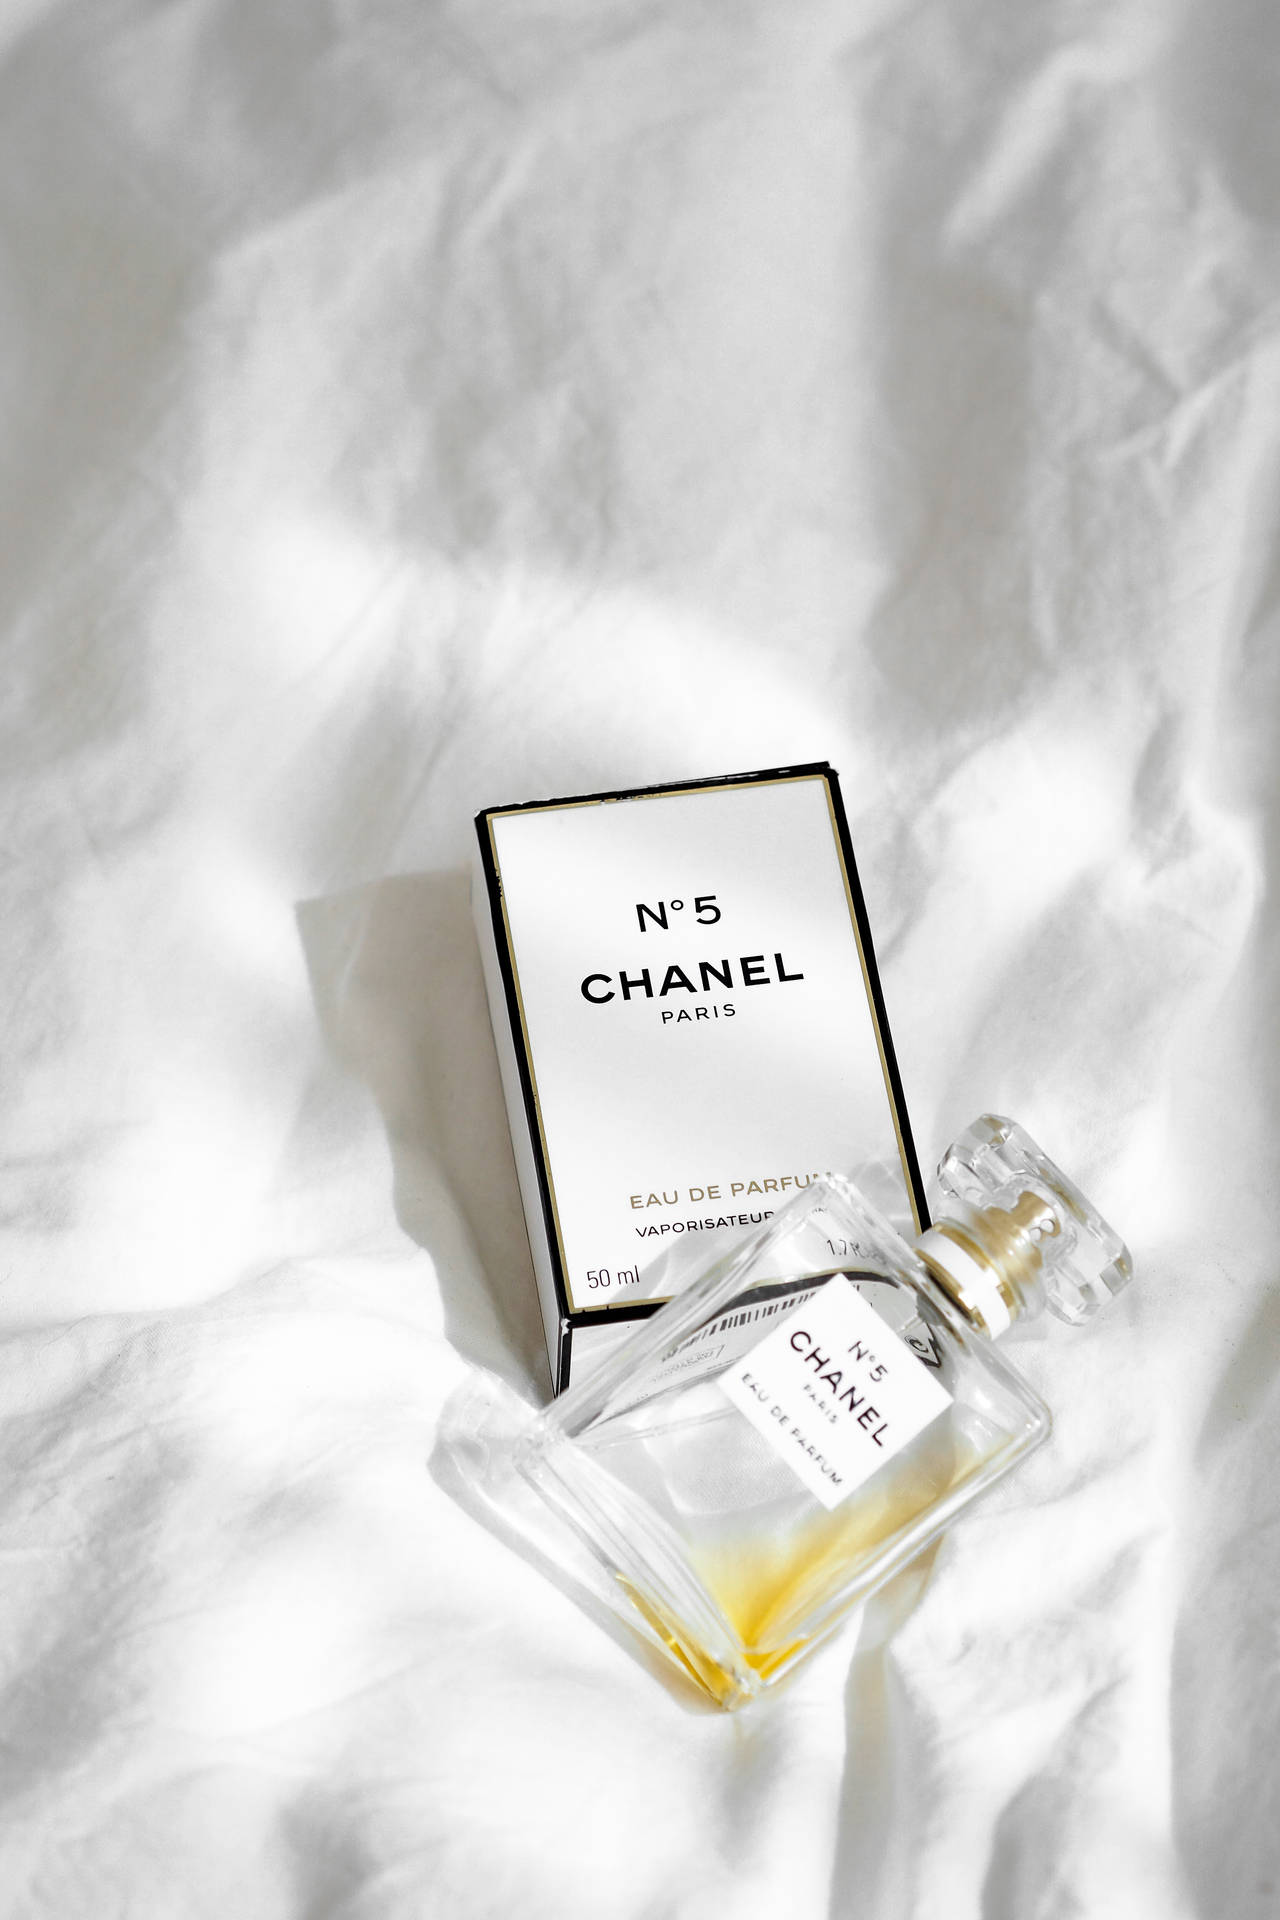 Chanel No. 5 Perfume Empty Bottle